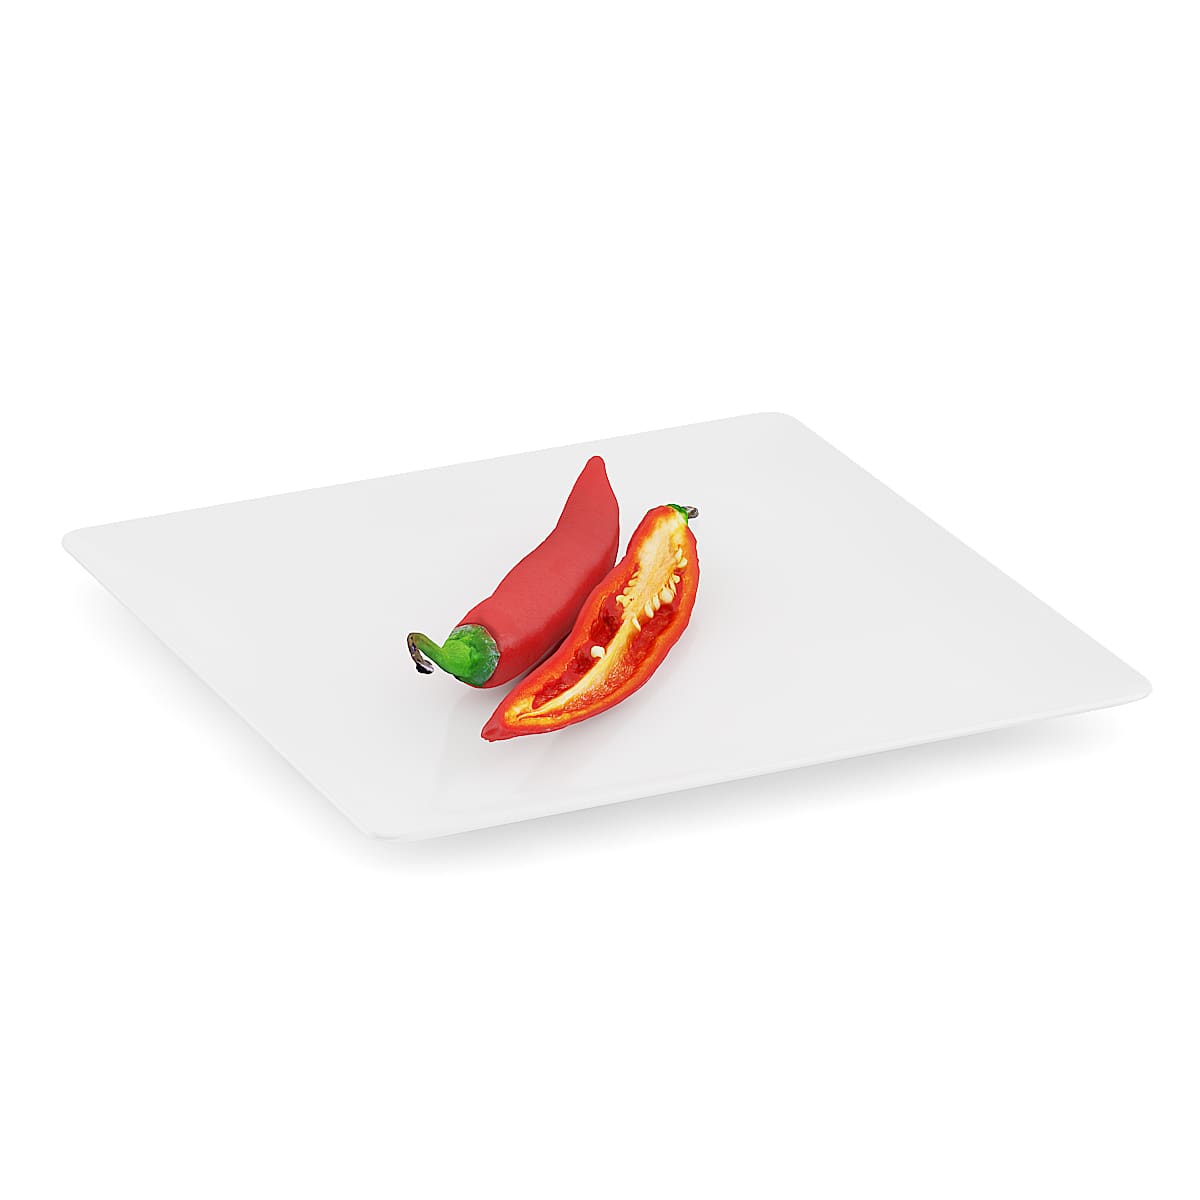 Chilli Pepper on White Plate